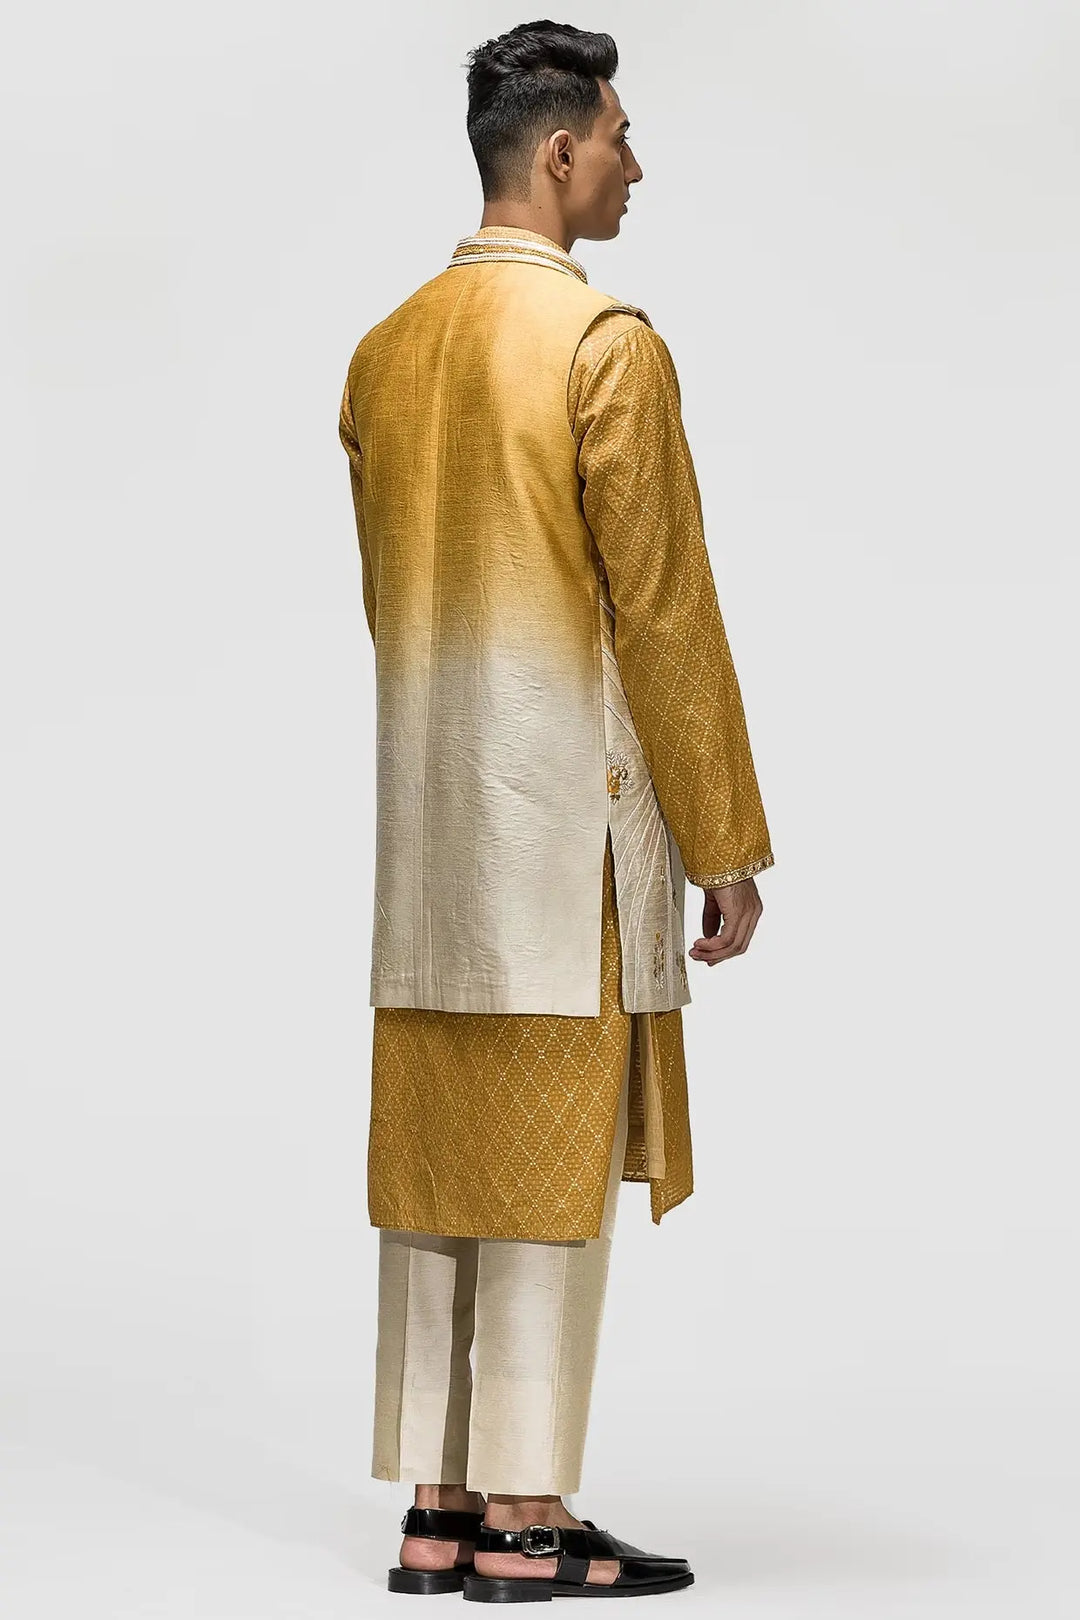 Yellow Ombre Dori Embroidery Long Bundi - Asuka Couture